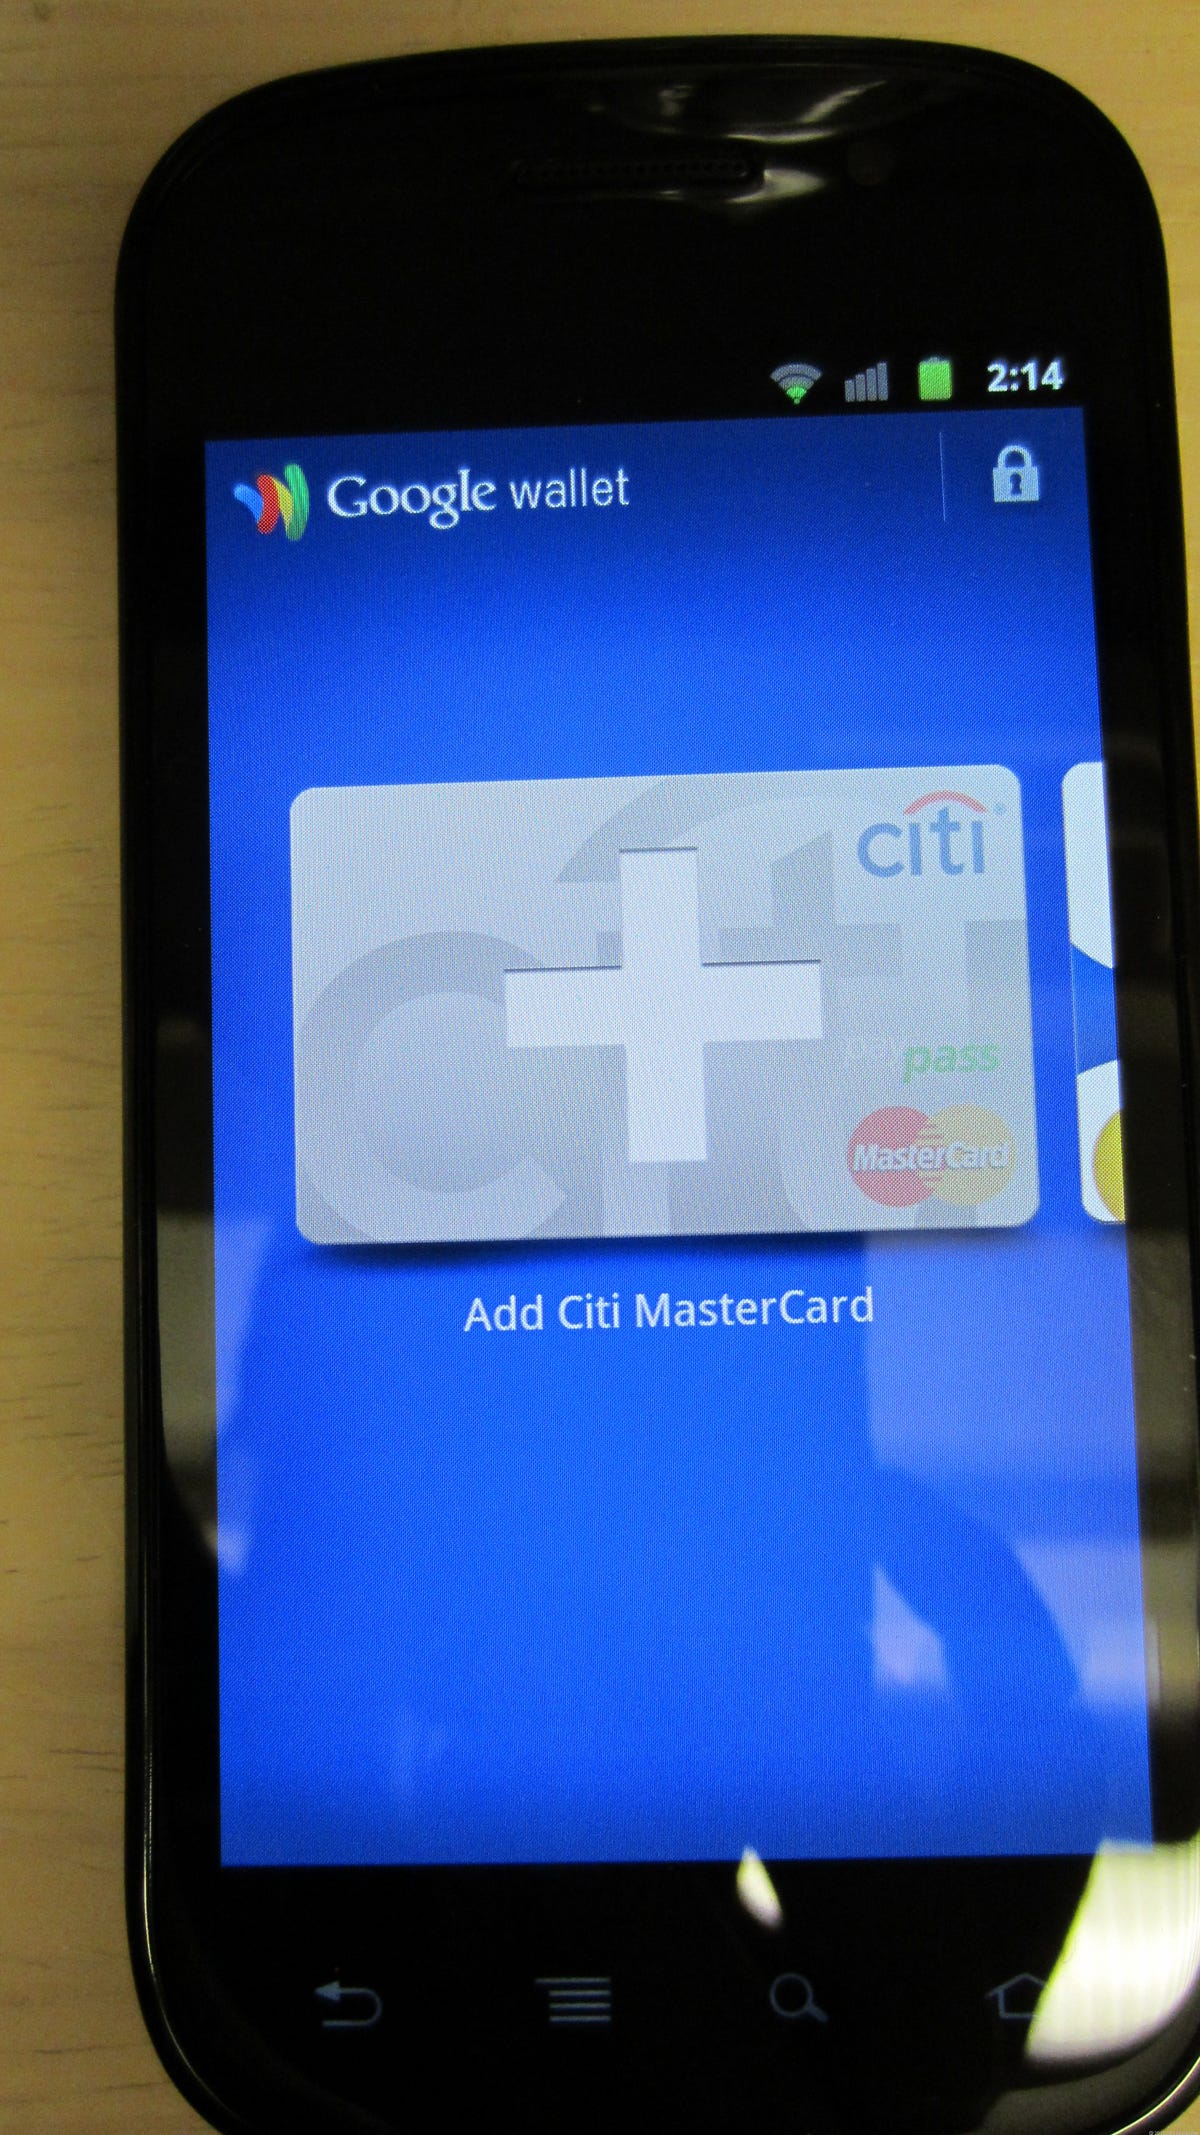 Adding_a_Citi_Mastercard_to_Google_Wallet.jpg